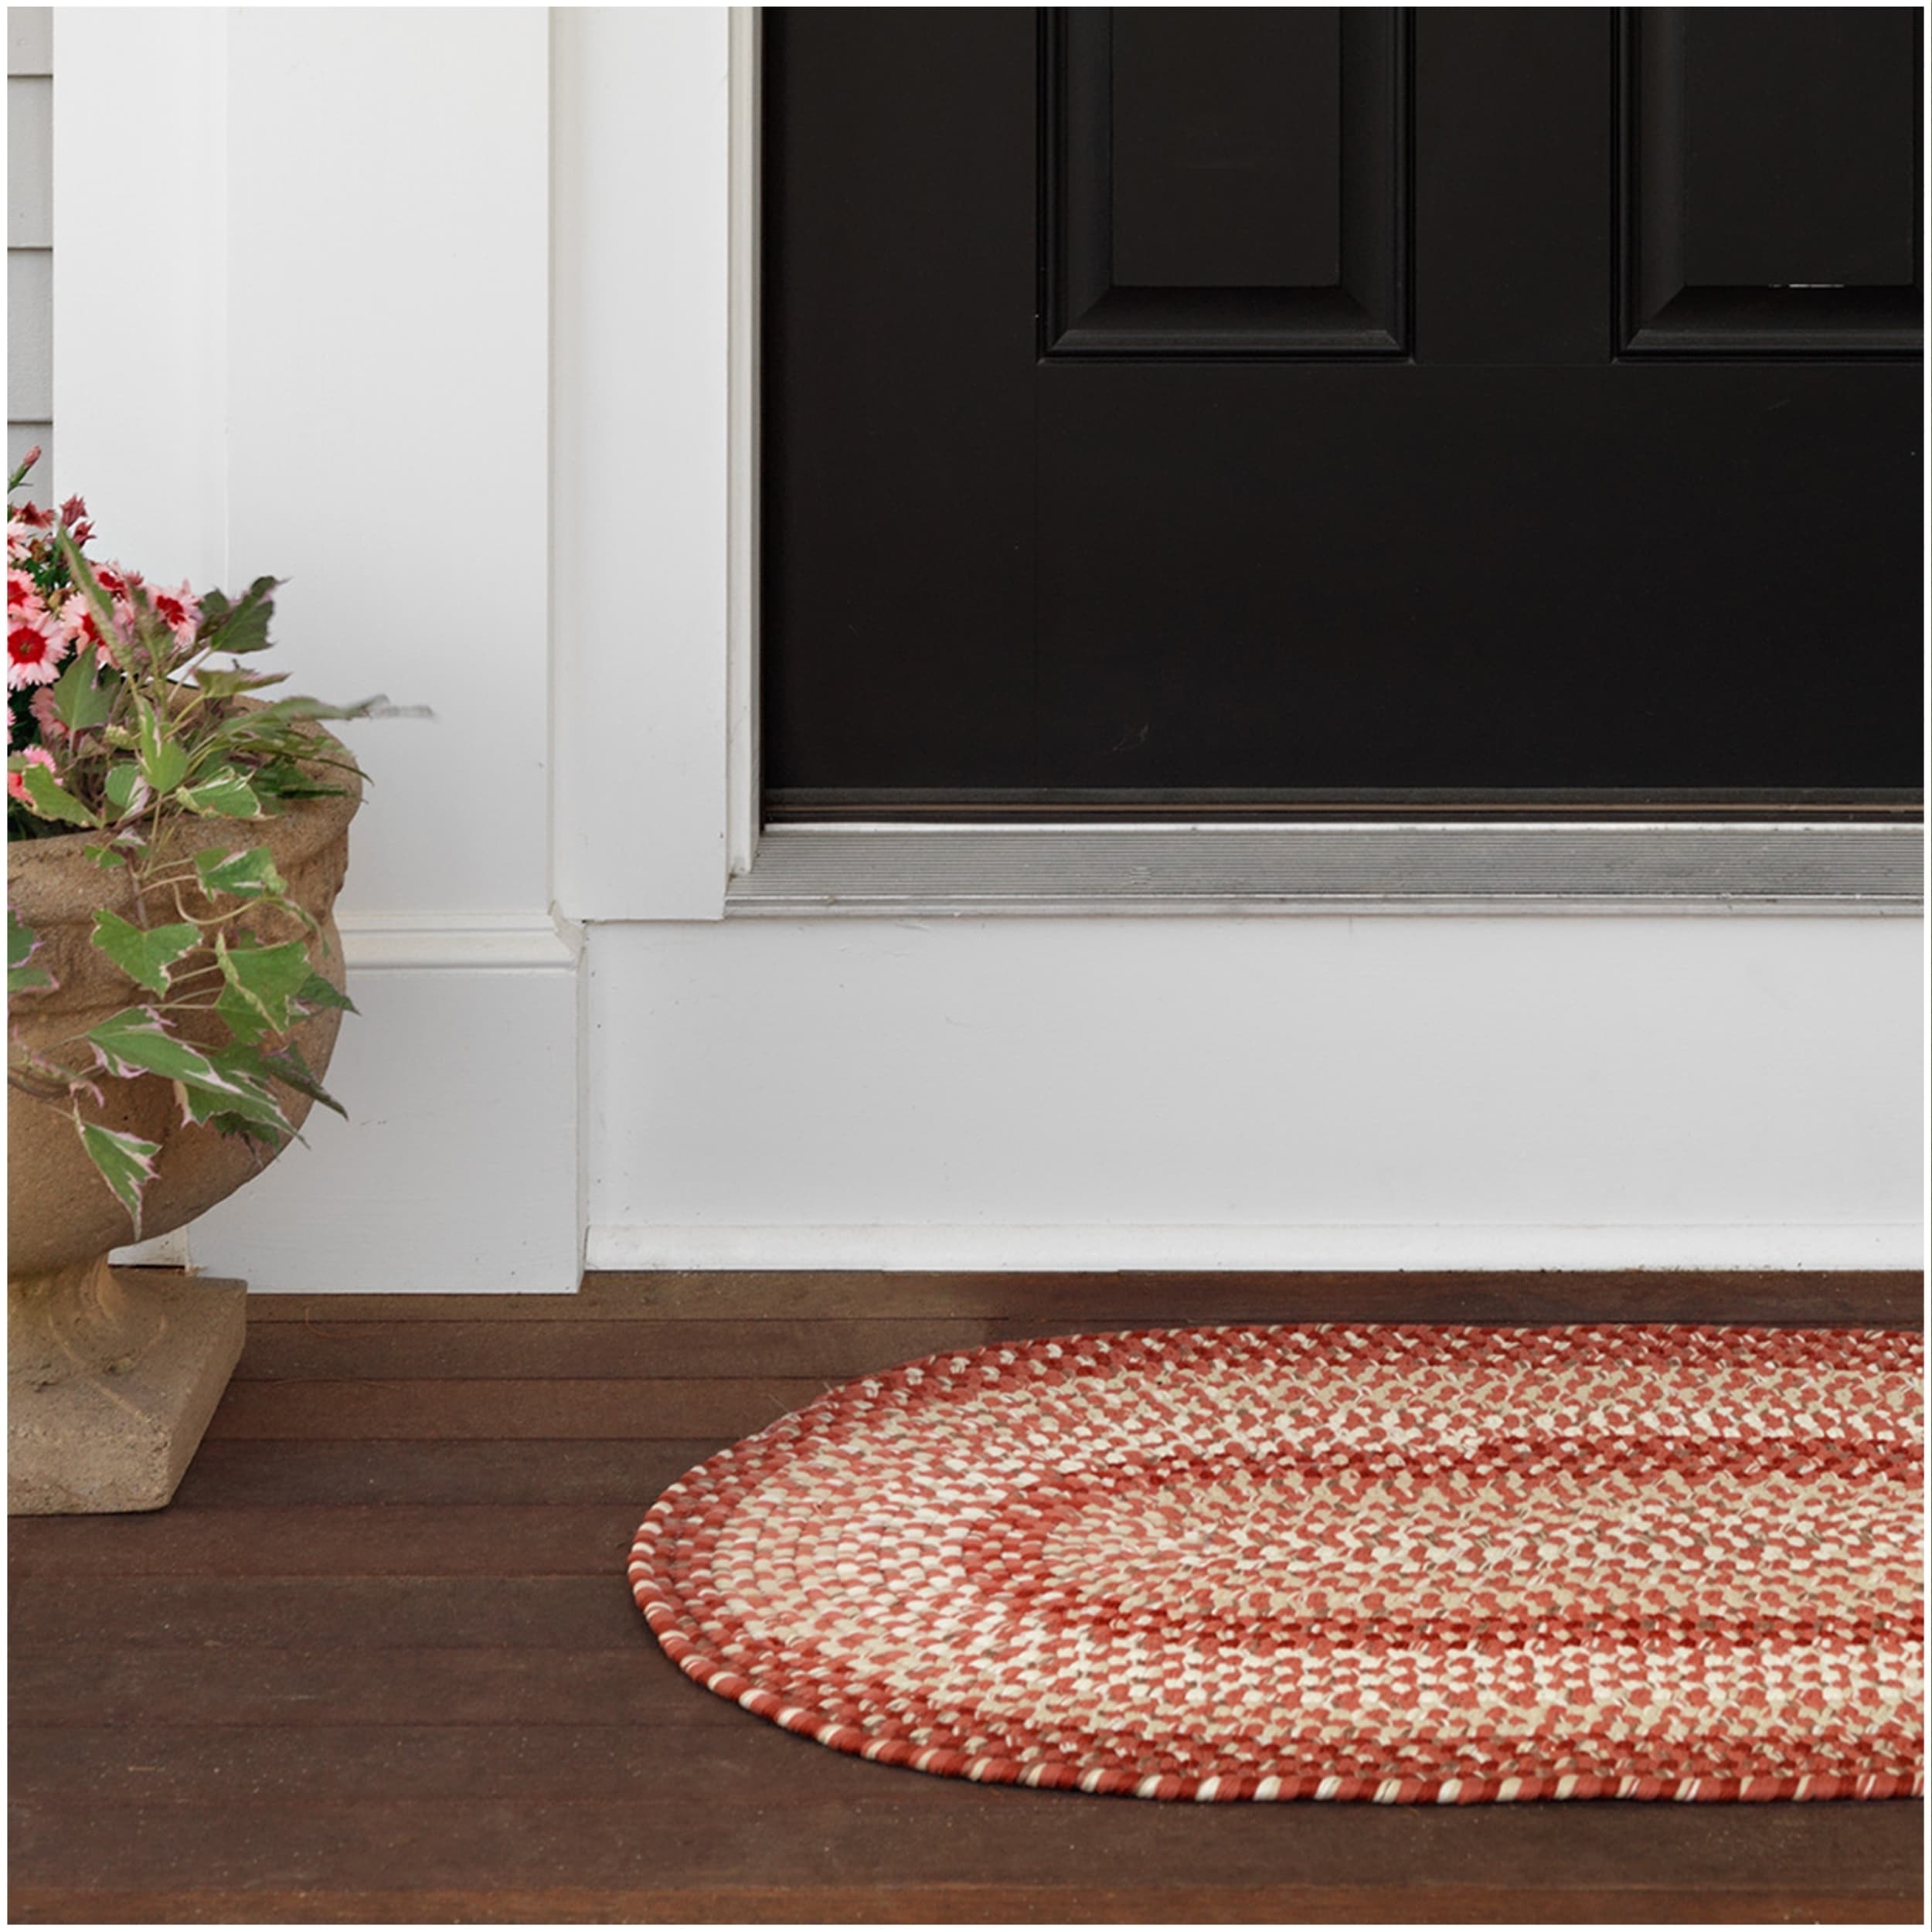 Colonial Mills Braided Doormat, Sunbrella Fabric, 3 Sizes & 4